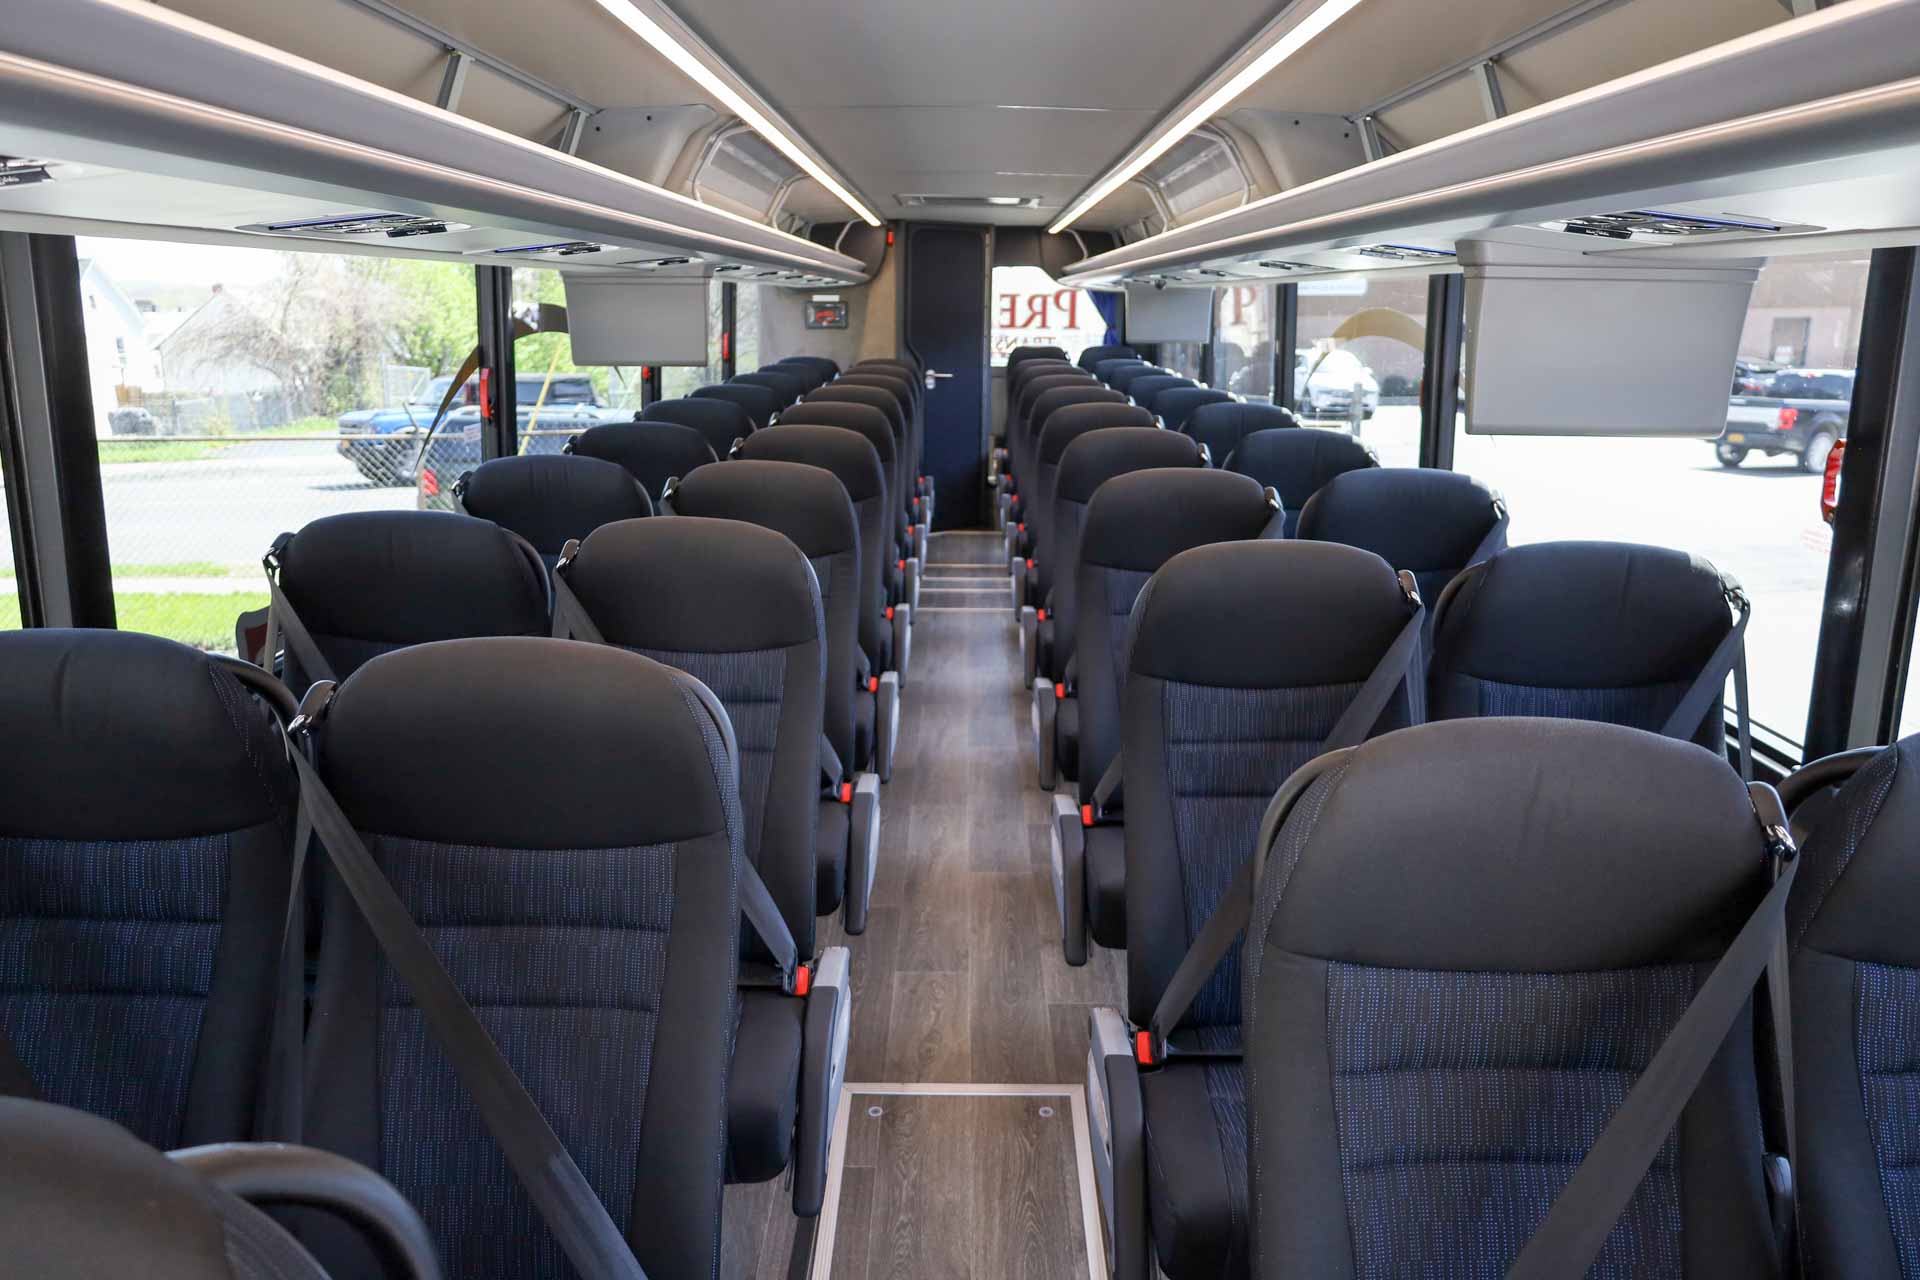 Coach Bus rental seats 